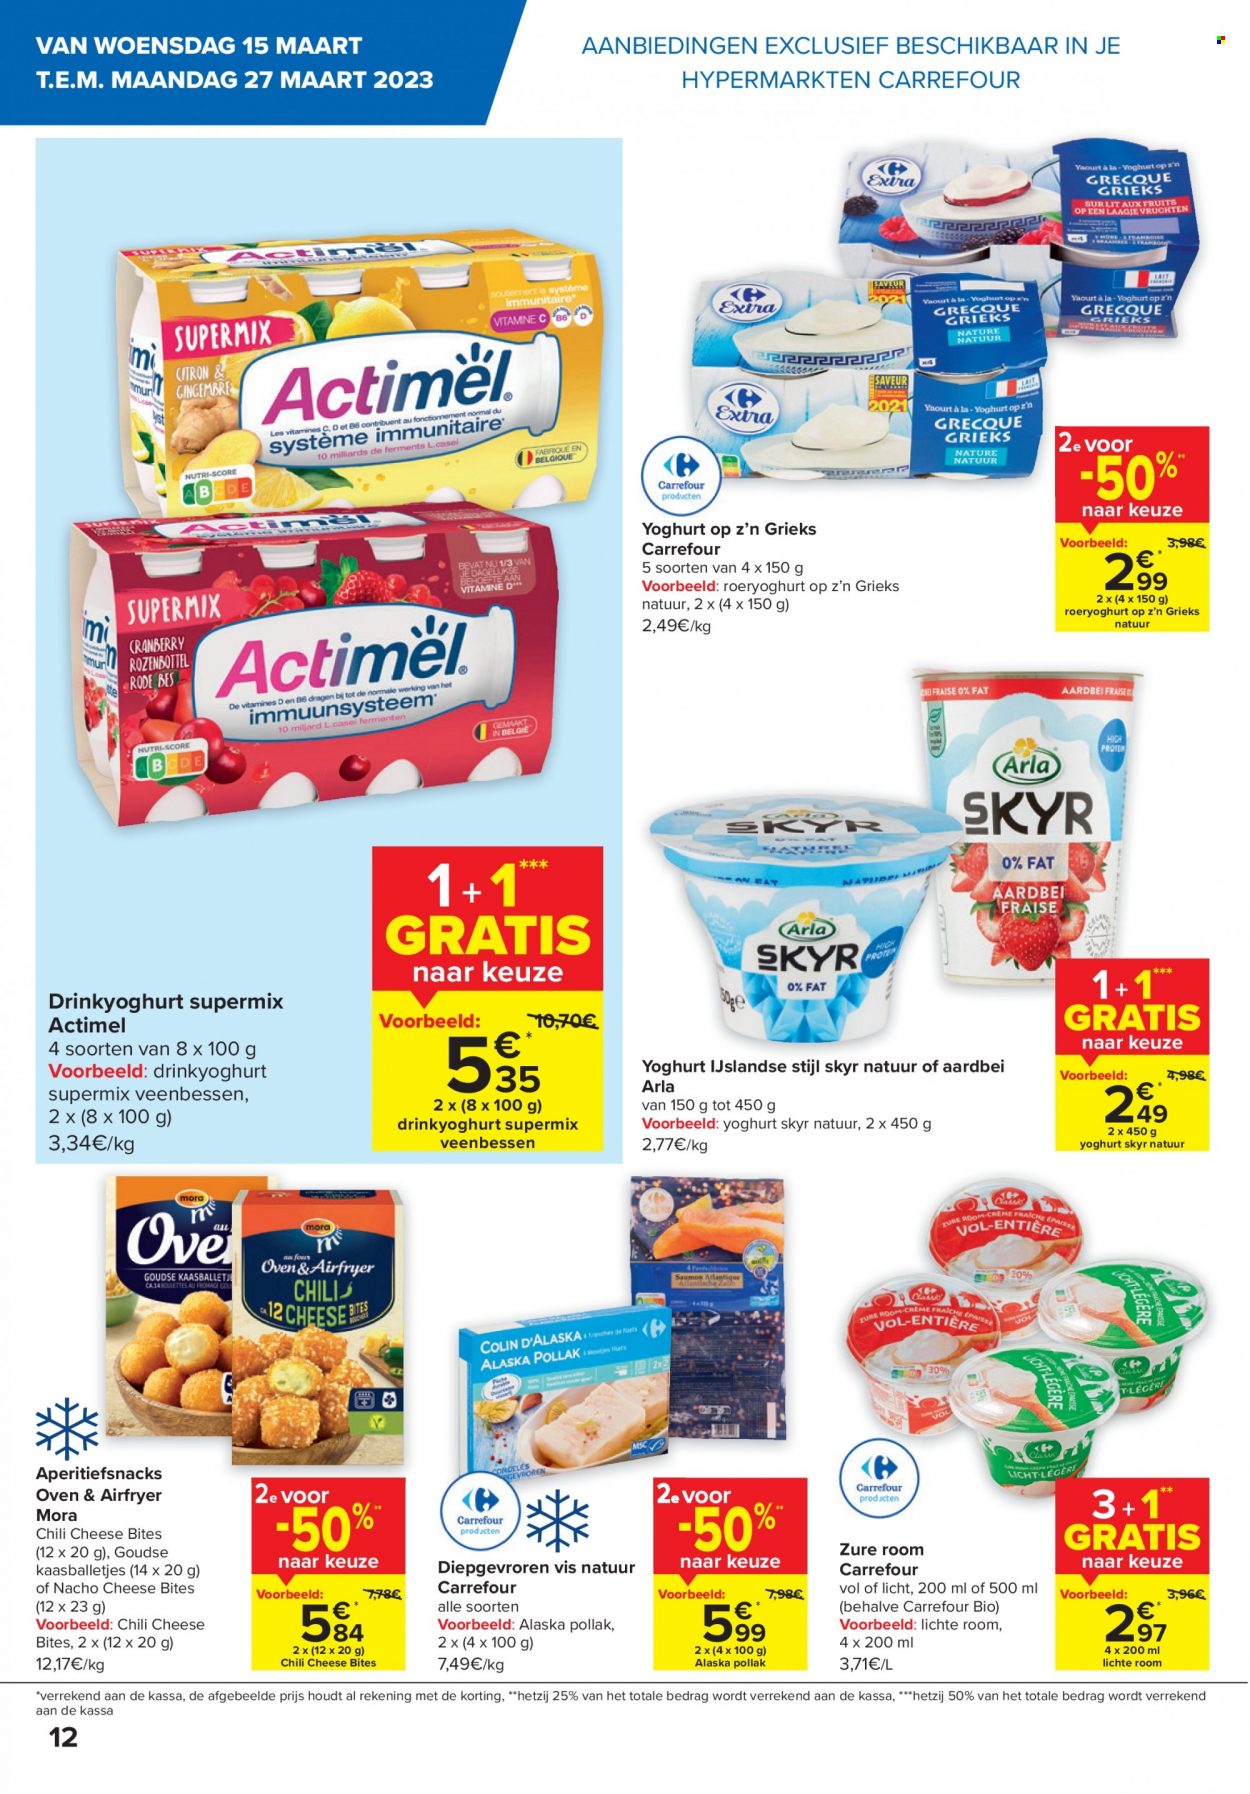 thumbnail - Carrefour-aanbieding - 15/03/2023 - 27/03/2023 -  producten in de aanbieding - Arla, Skyr, yoghurt, drinkyoghurt, room, zure room. Pagina 12.